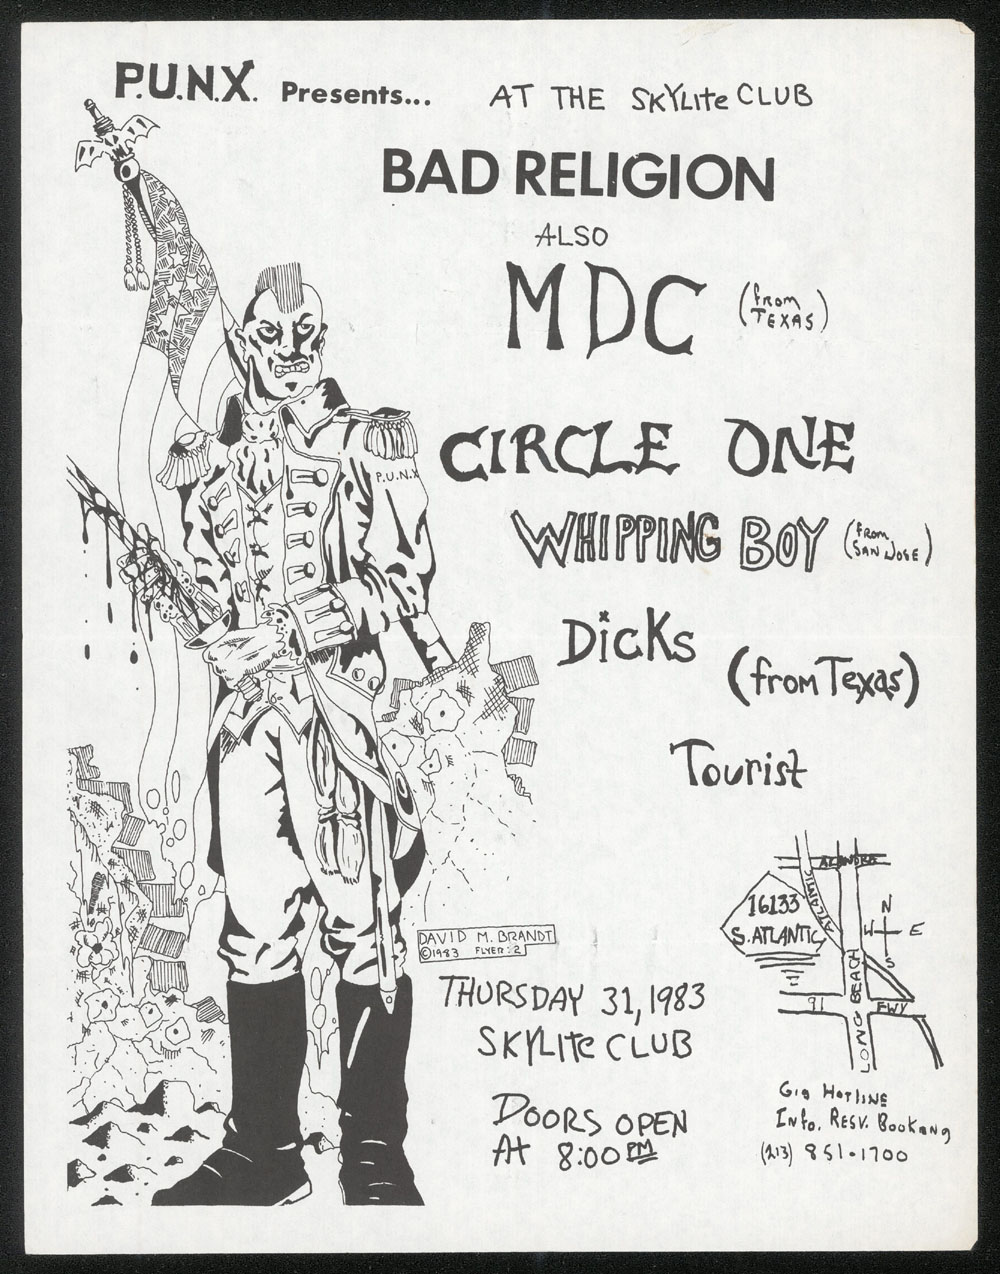 BAD RELIGION w/ MDC, Circle One, Whipping Boy, Dicks, Tourist at Skylite Club